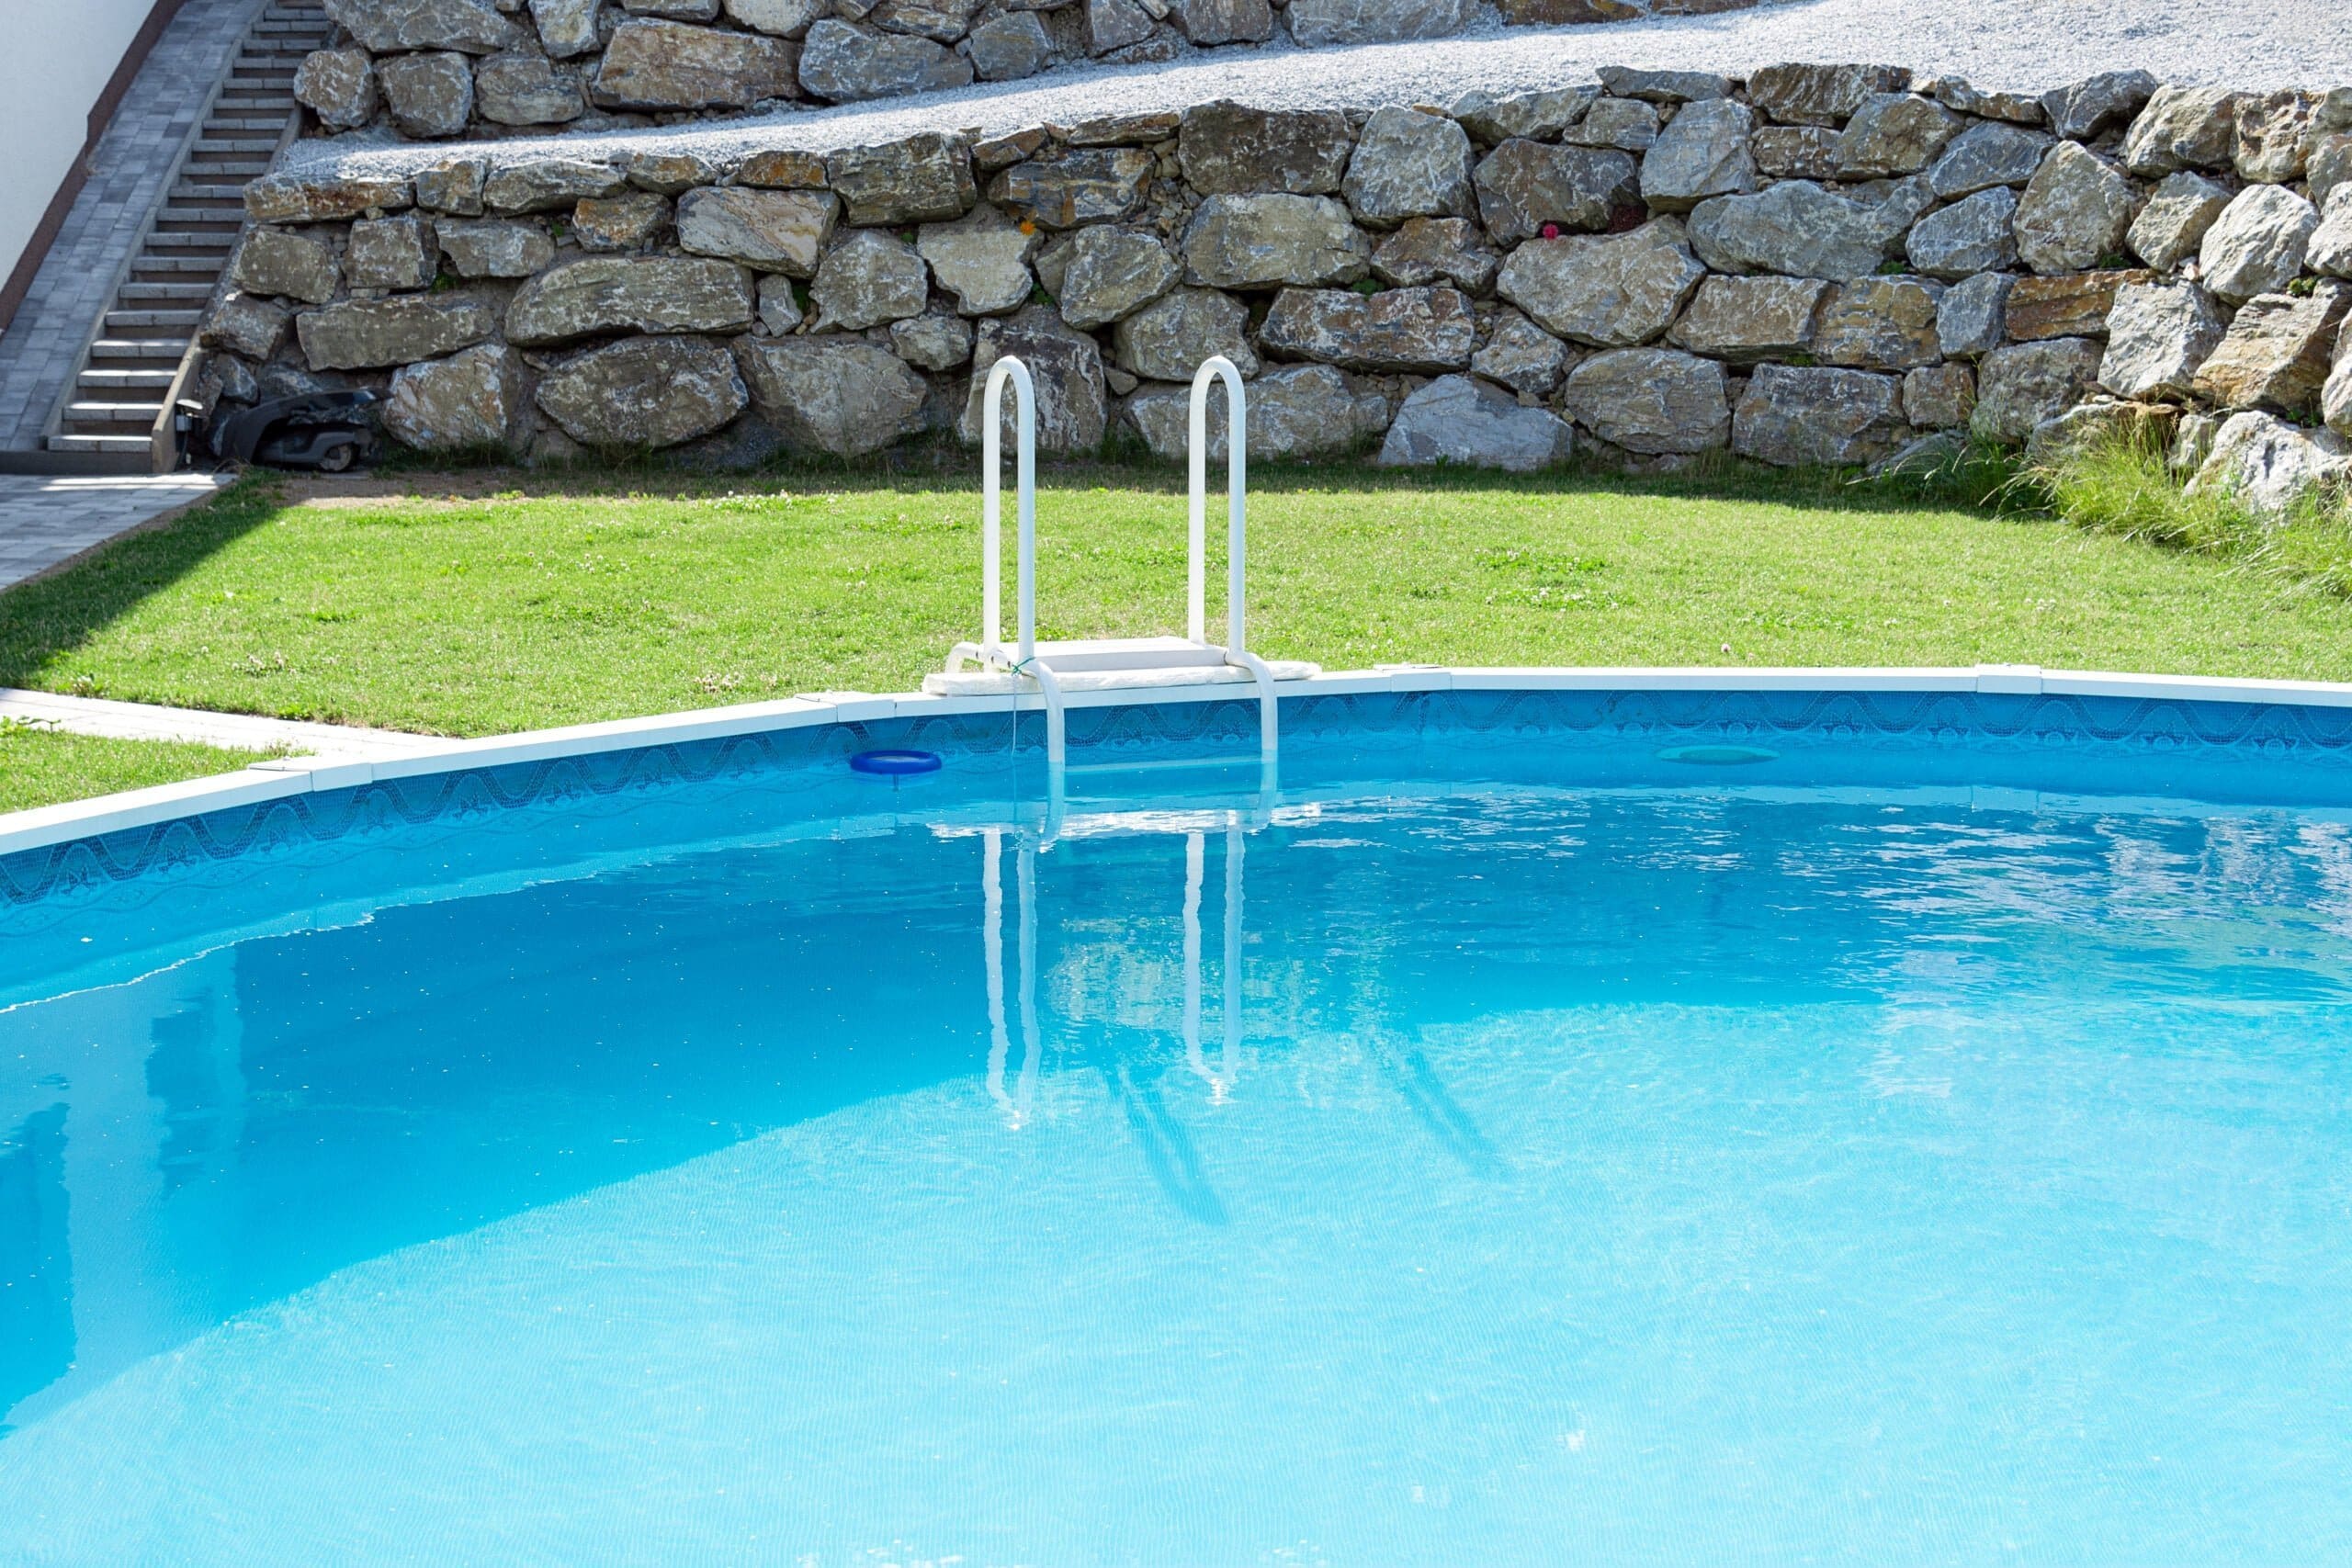 homeowner practice pool safety at home in inground pool